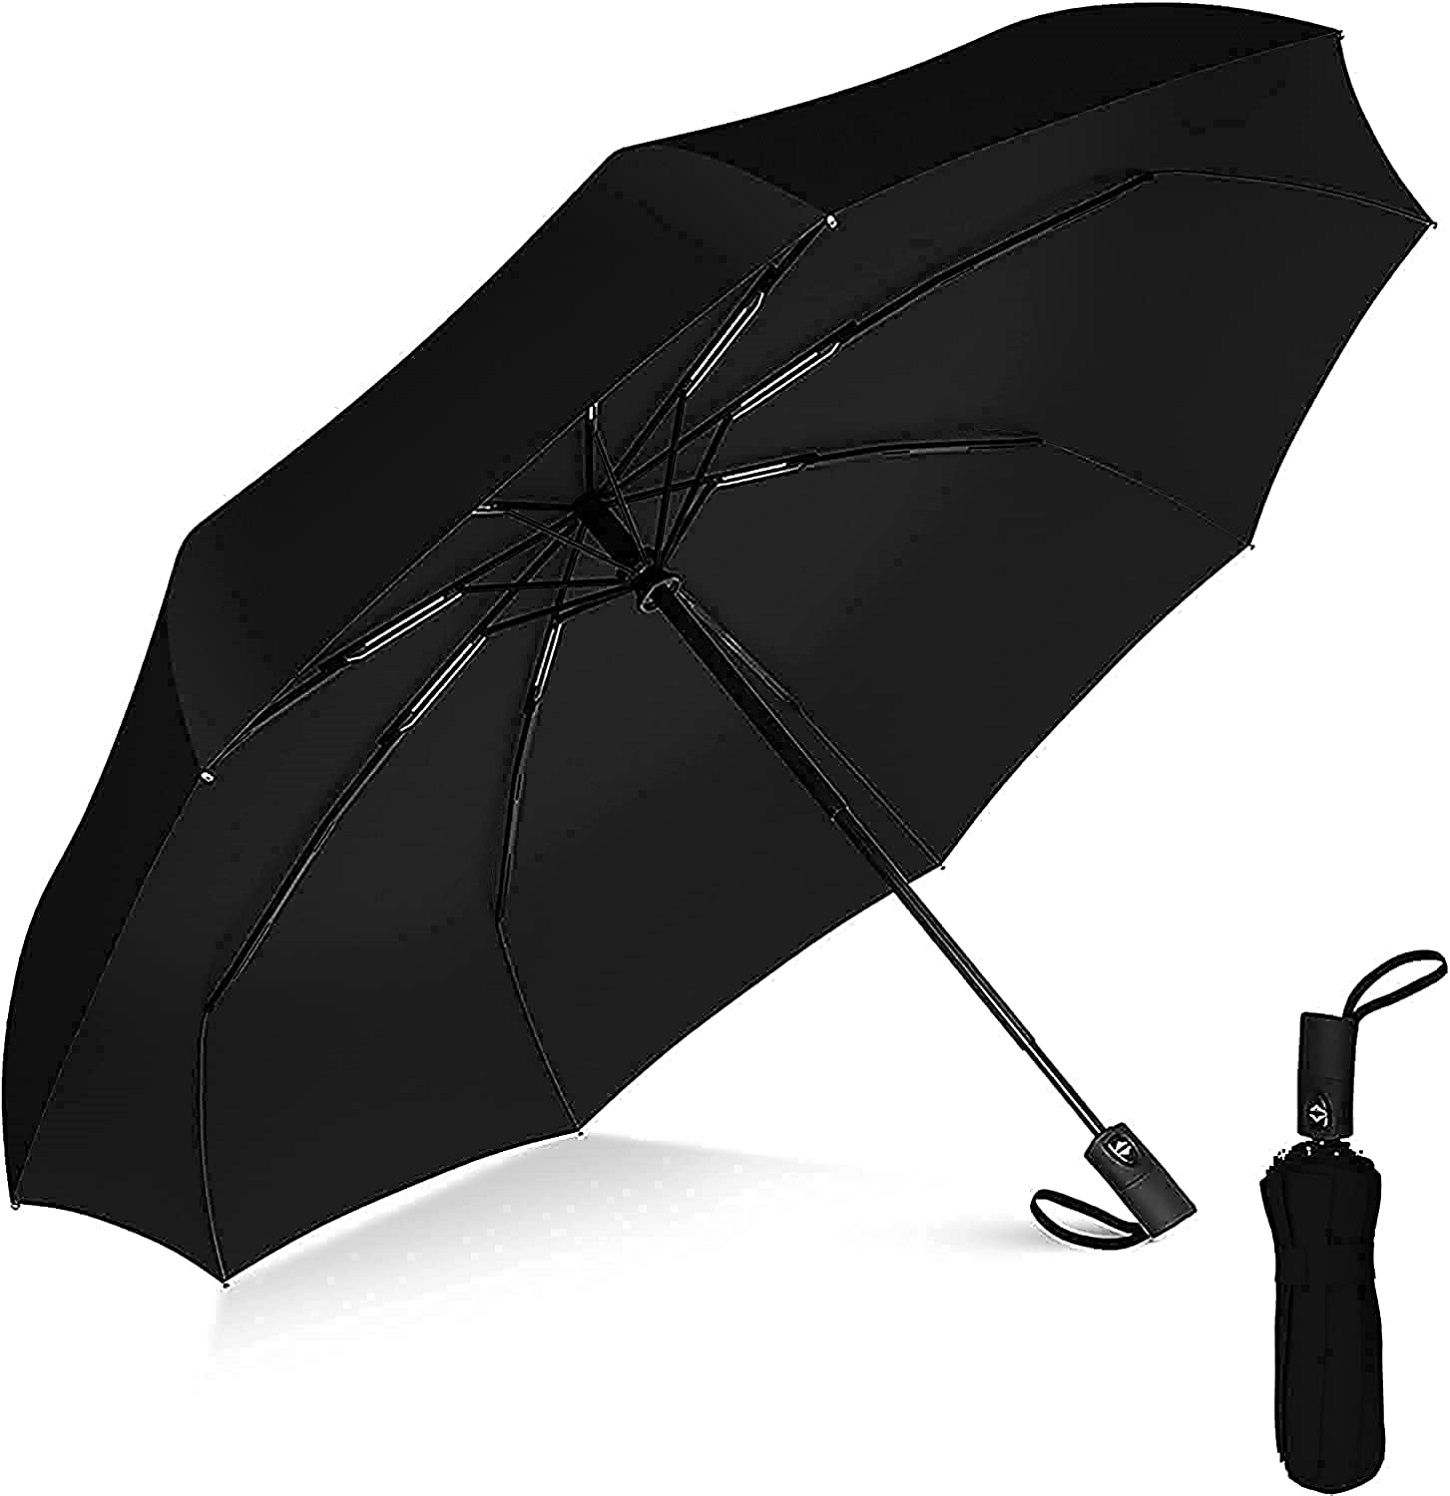     			GEEO Black 3 Fold Umbrella